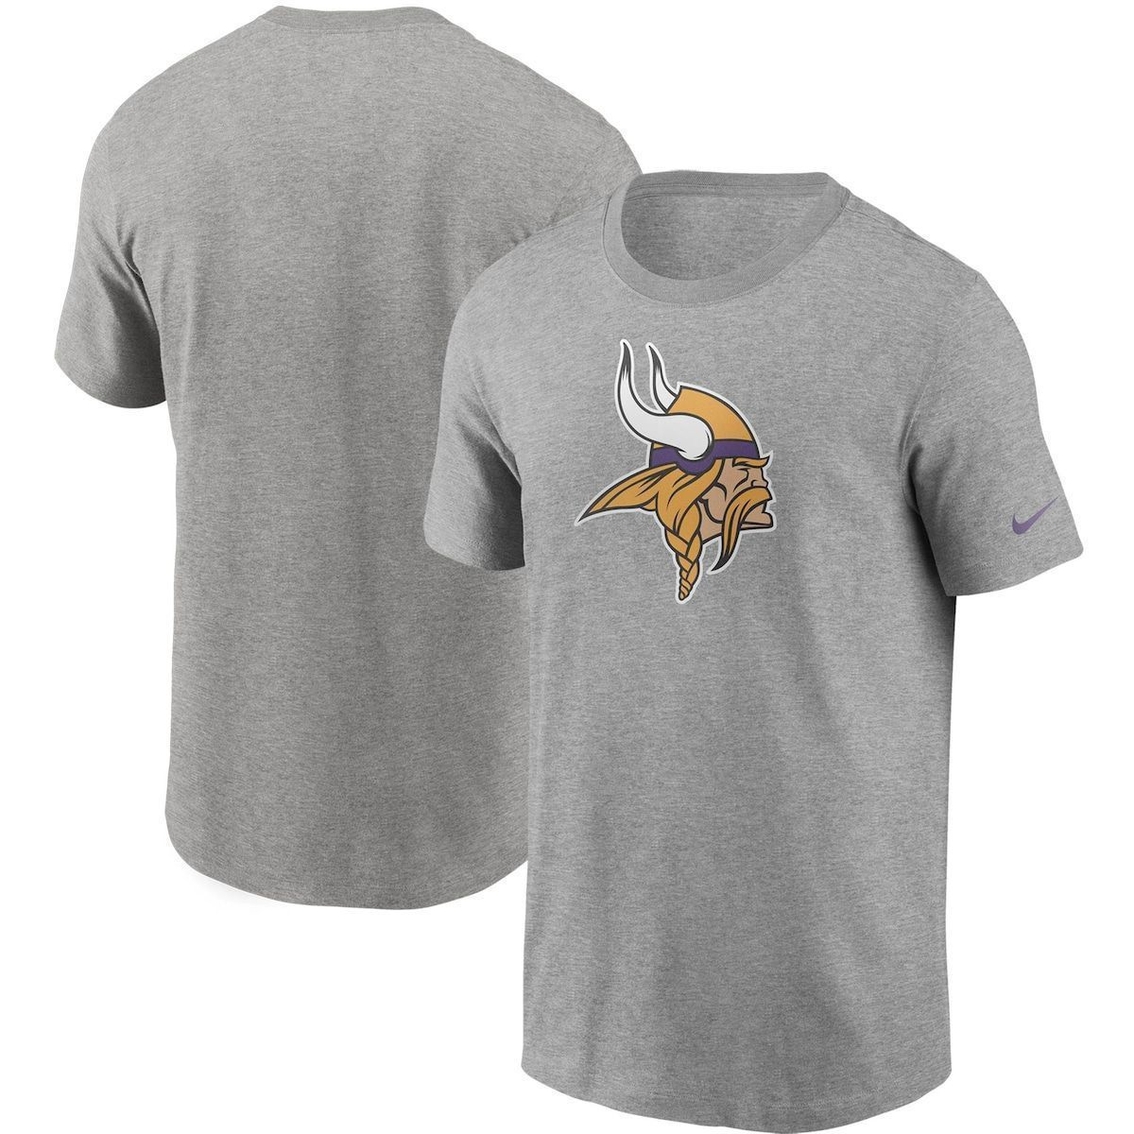 Men's Nike Heathered Gray Minnesota Vikings Primary Logo T-Shirt - Image 1 of 4